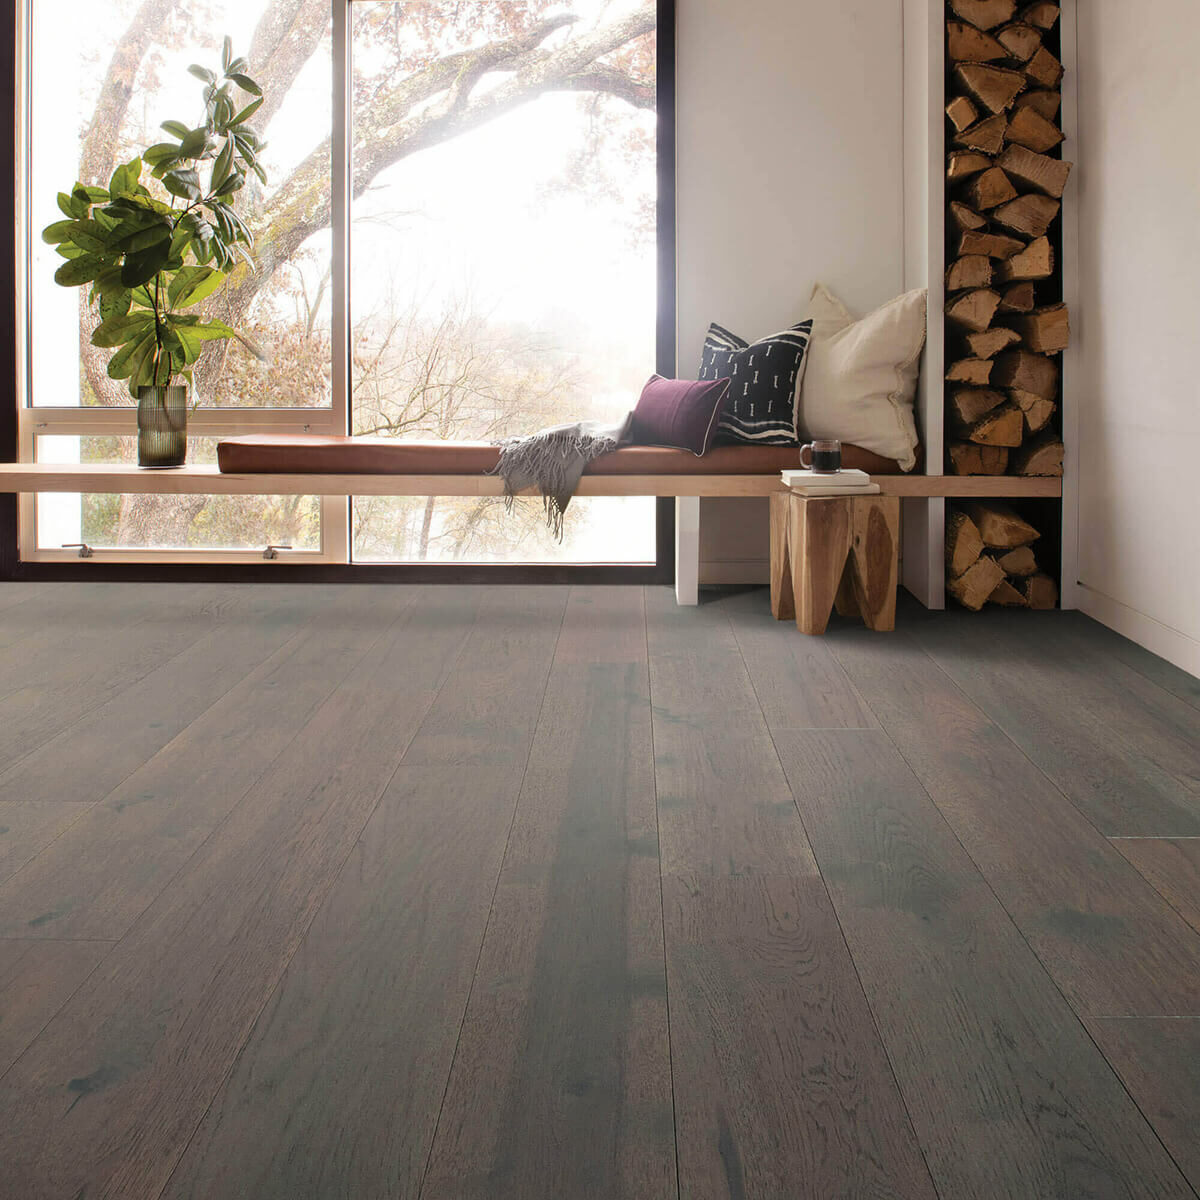 Hardwood flooring | Floor Coverings of Winona